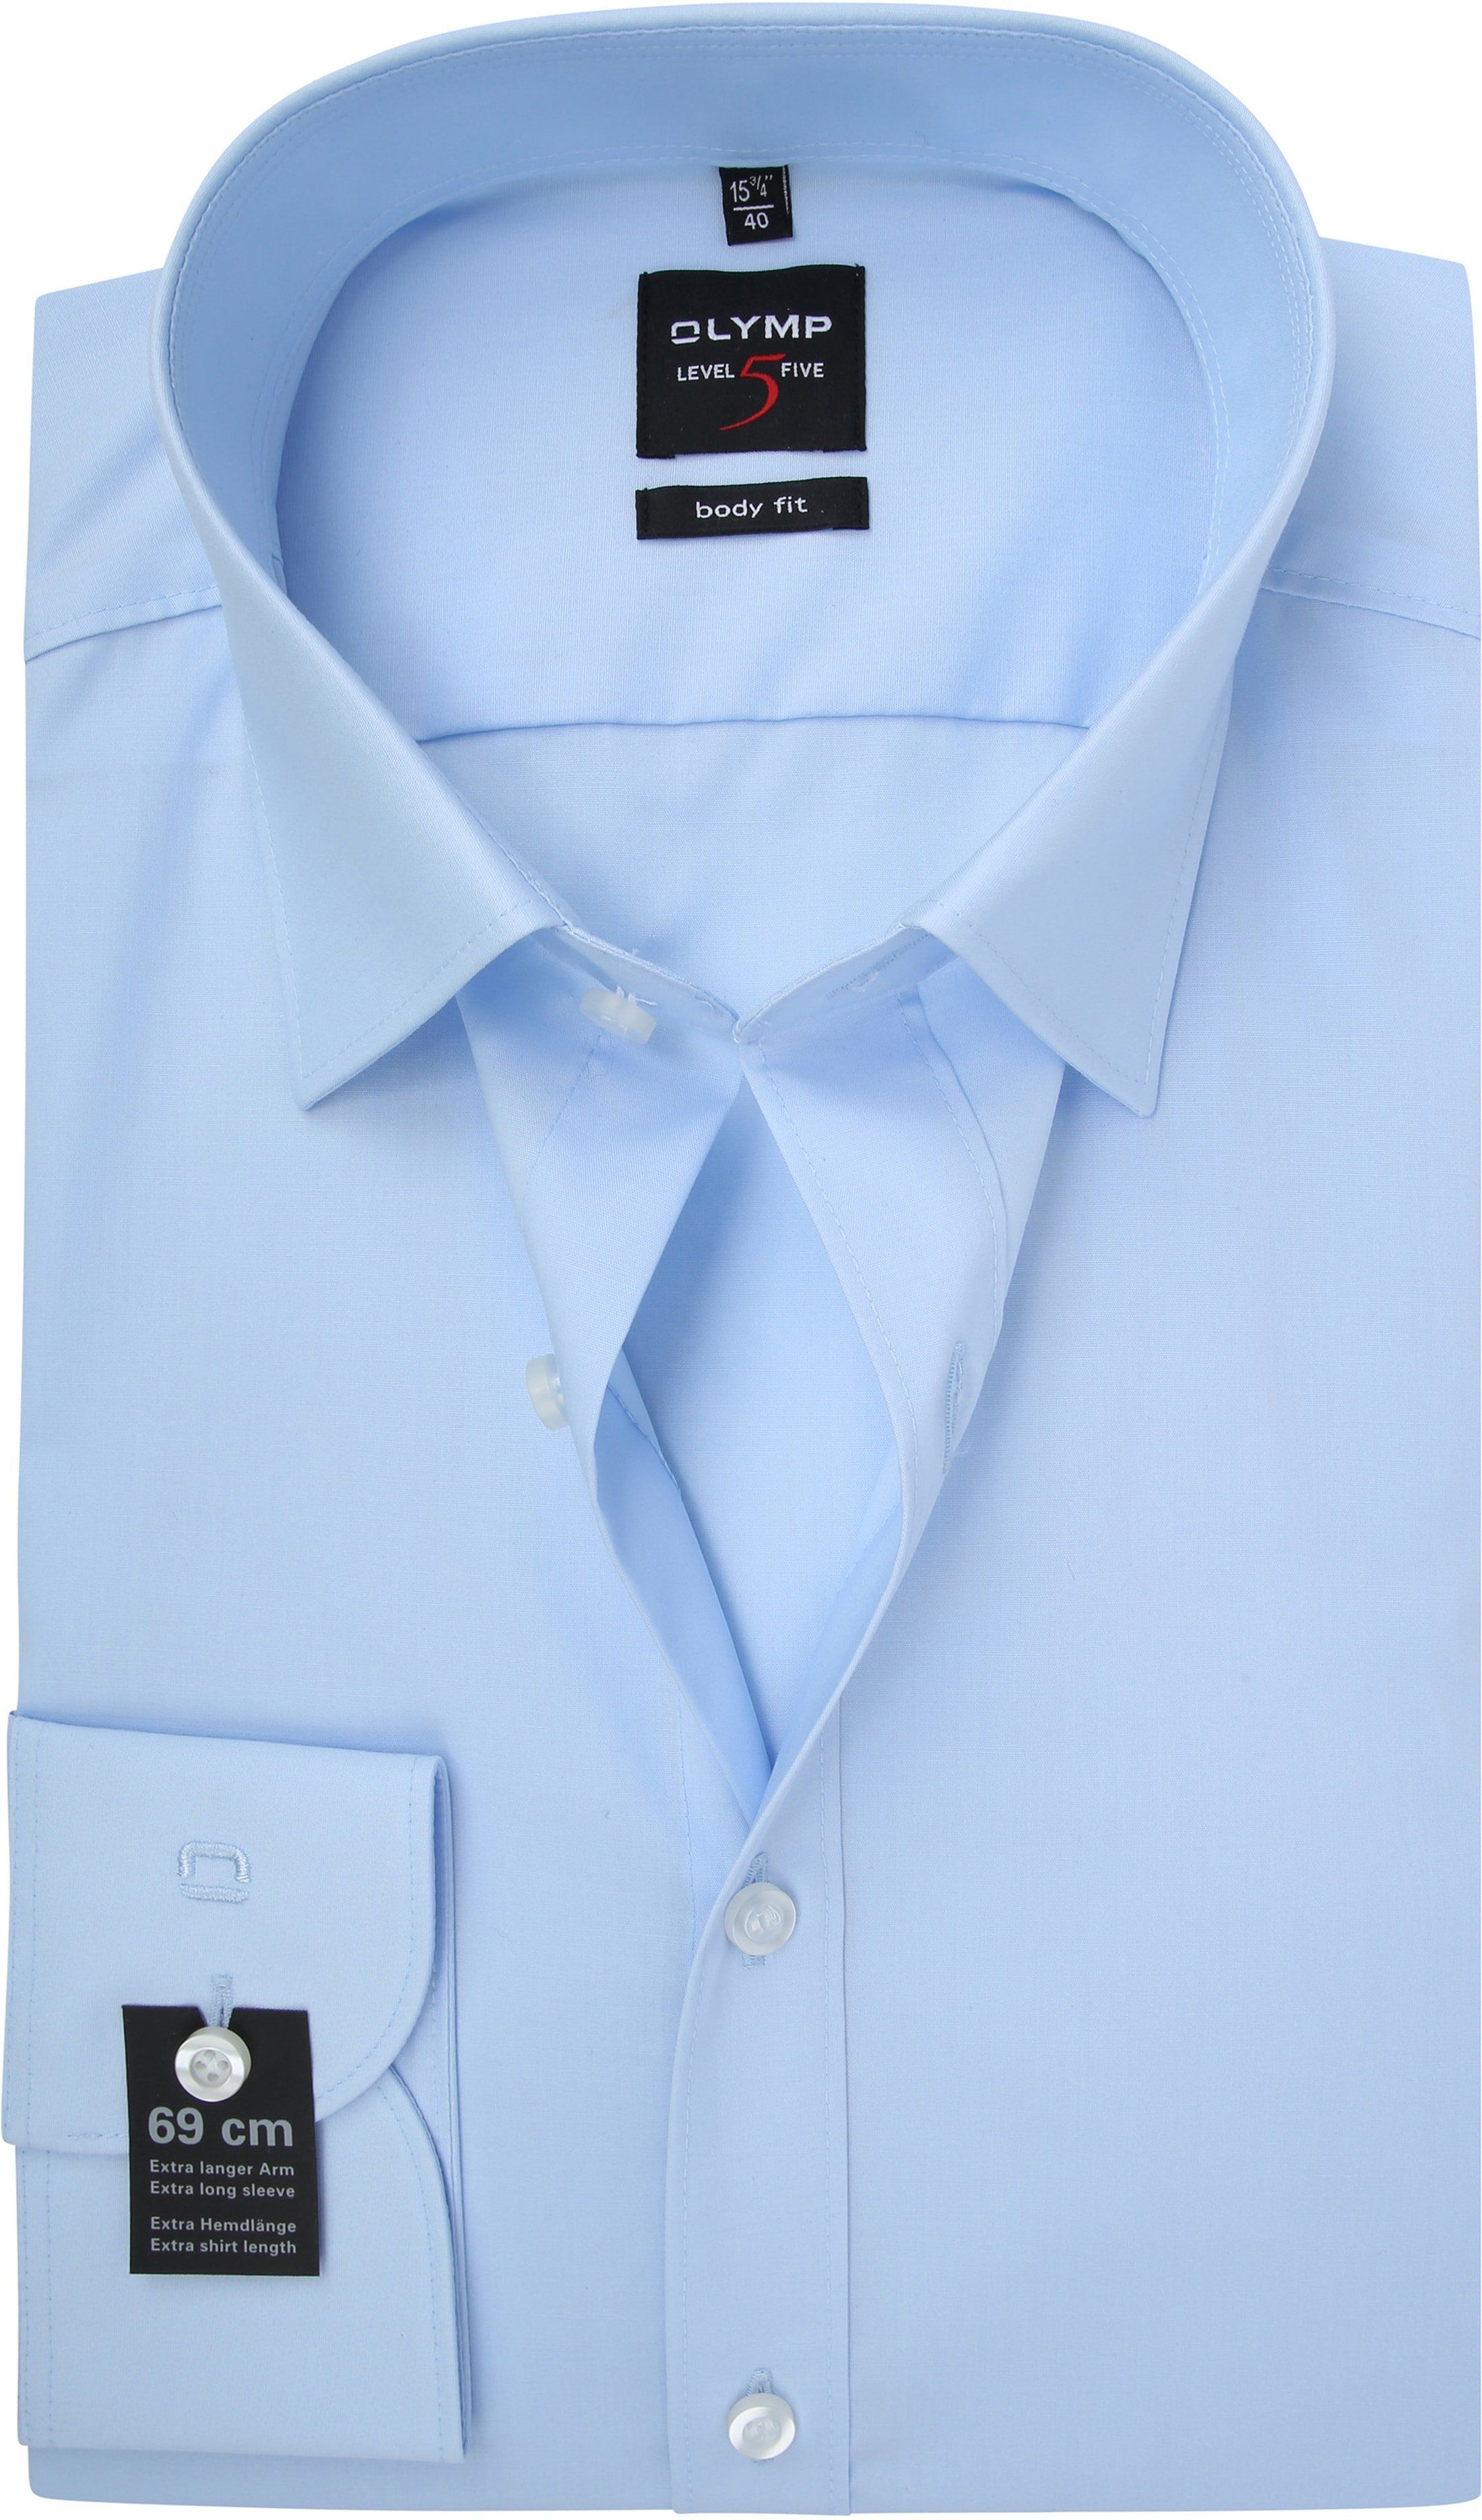 Olymp Level Five Shirt Extra Long Sleeve Body-Fit Light Light blue Blue size 16